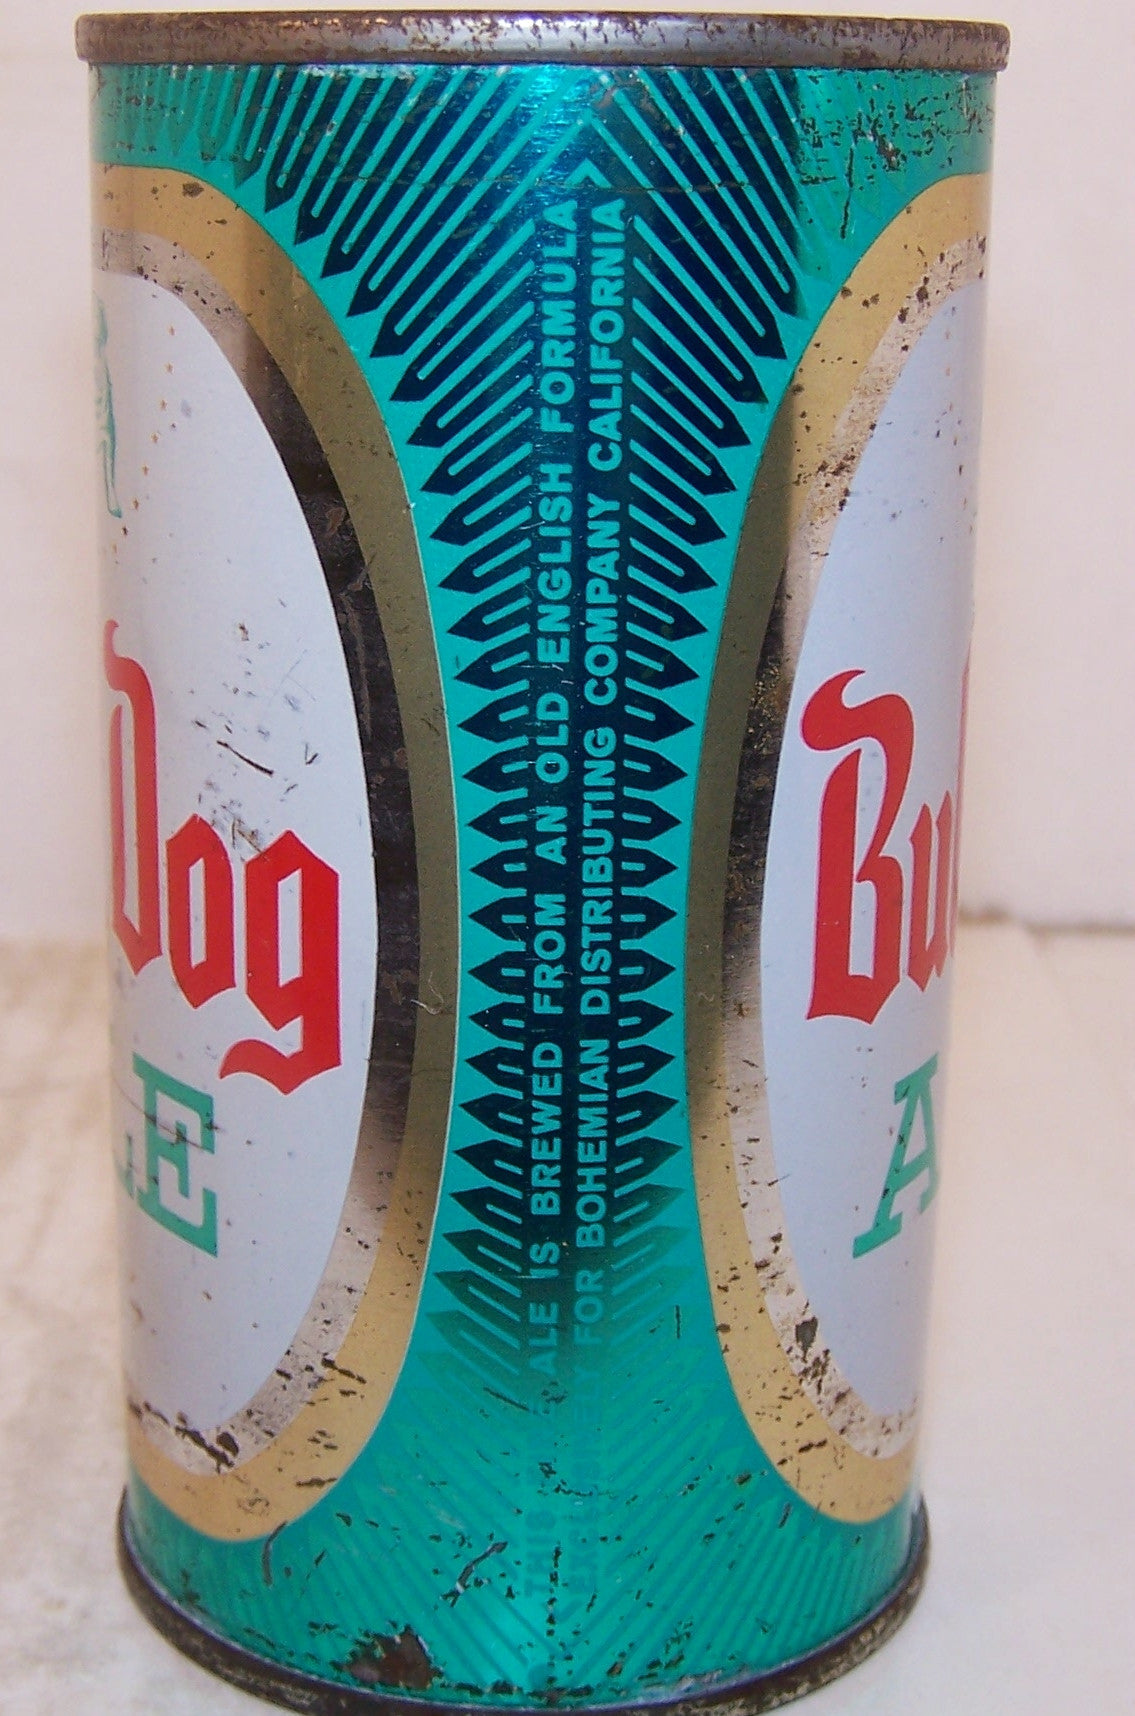 Bull Dog Ale, USBC 45-31, Grade 1-